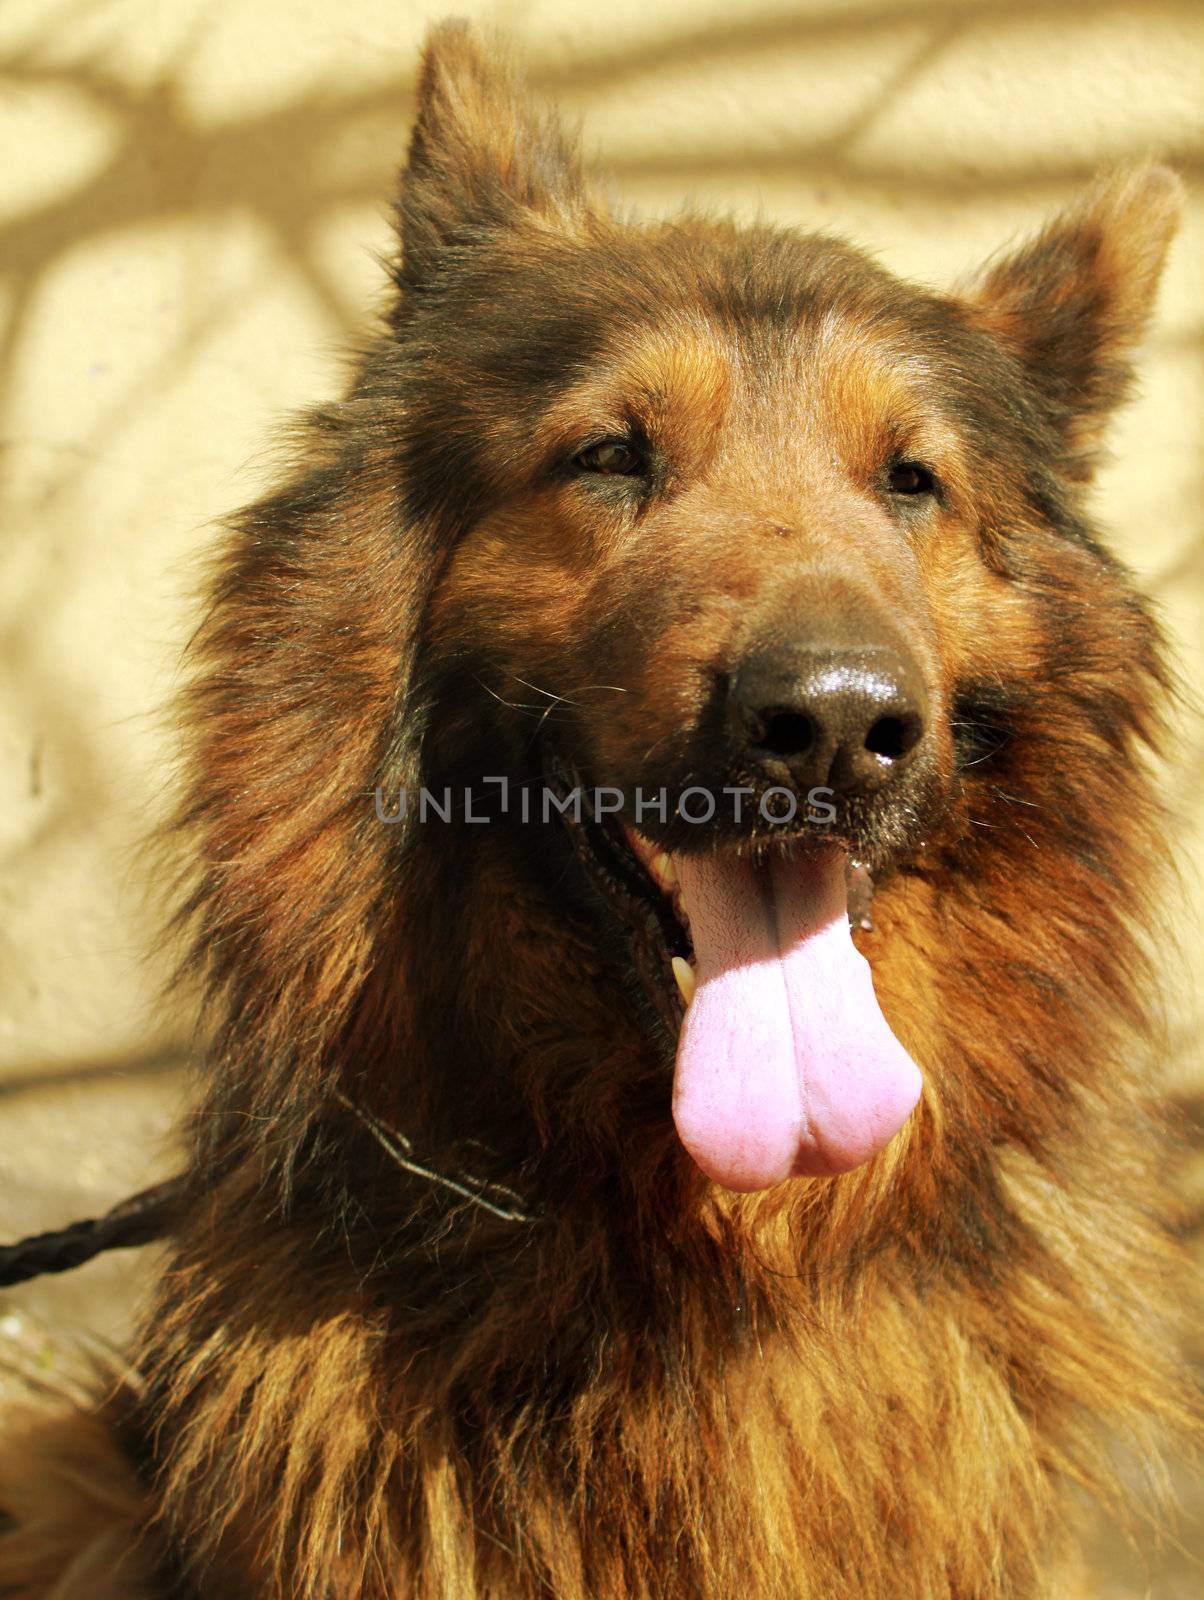 Black and Tan German Shepherd dog head in portrait